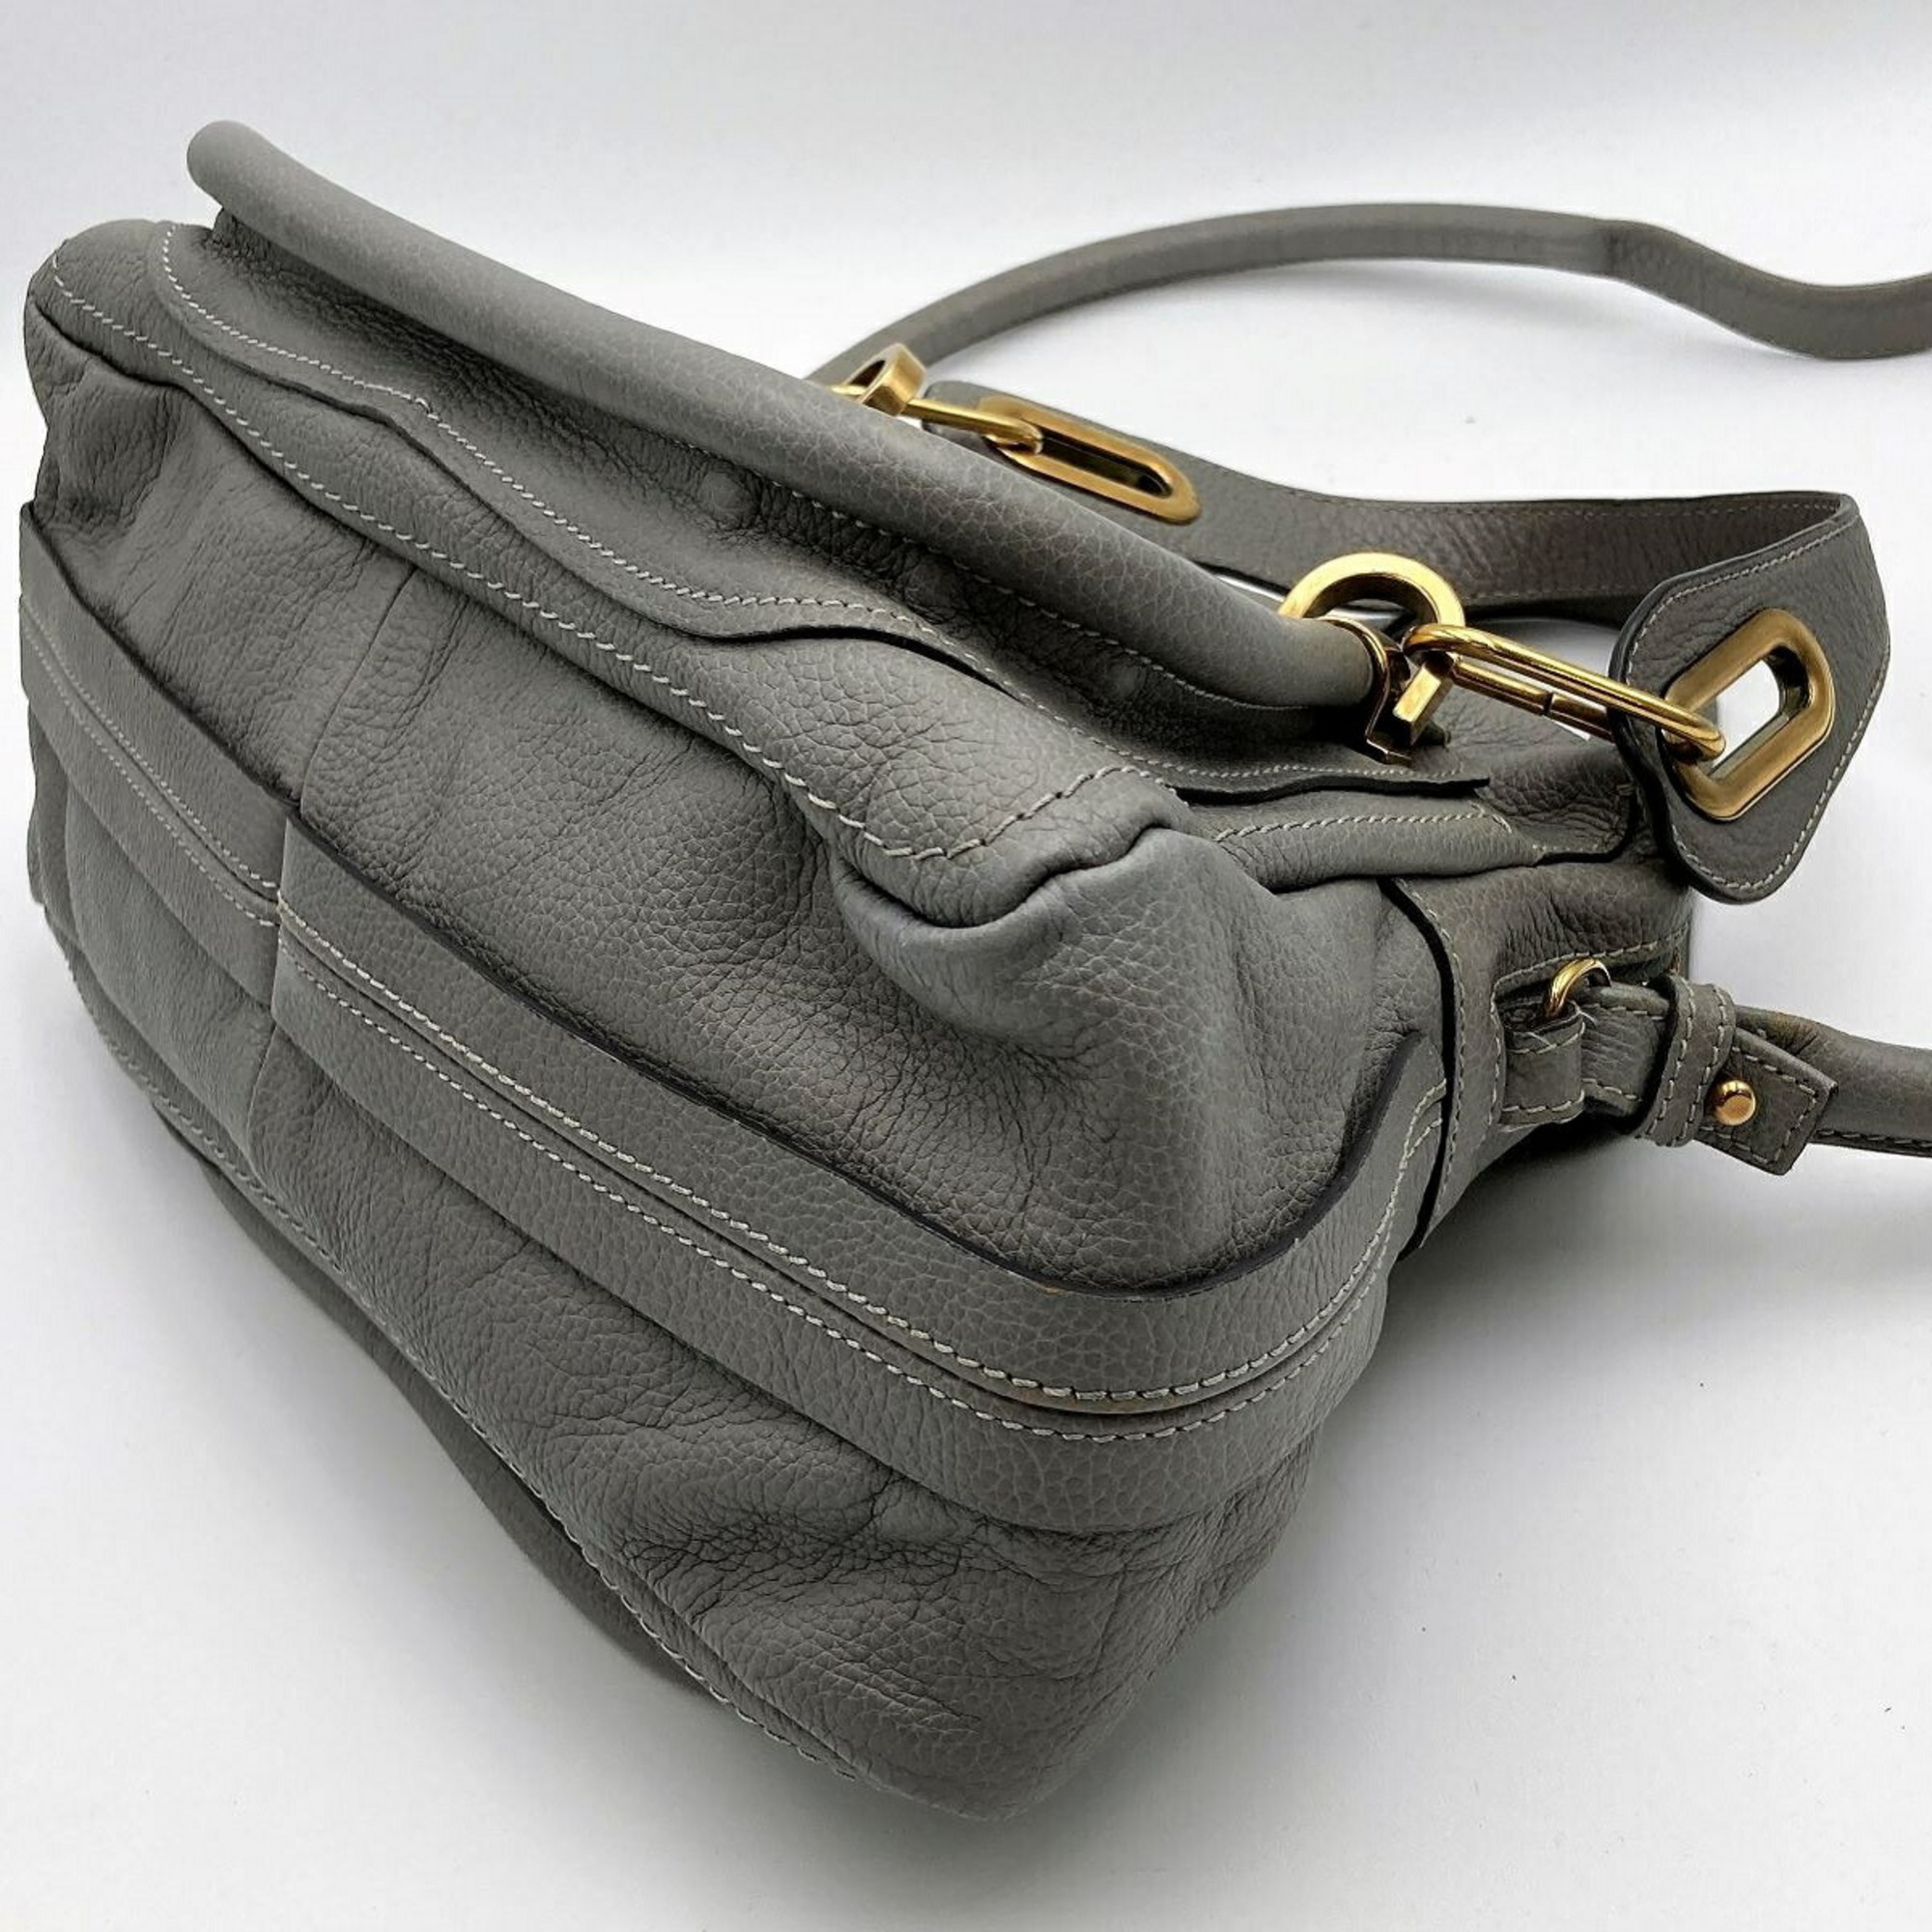 Chloé Chloe Mini Parati 2way Shoulder Bag Handbag Crossbody Leather Gray Ladies Fashion